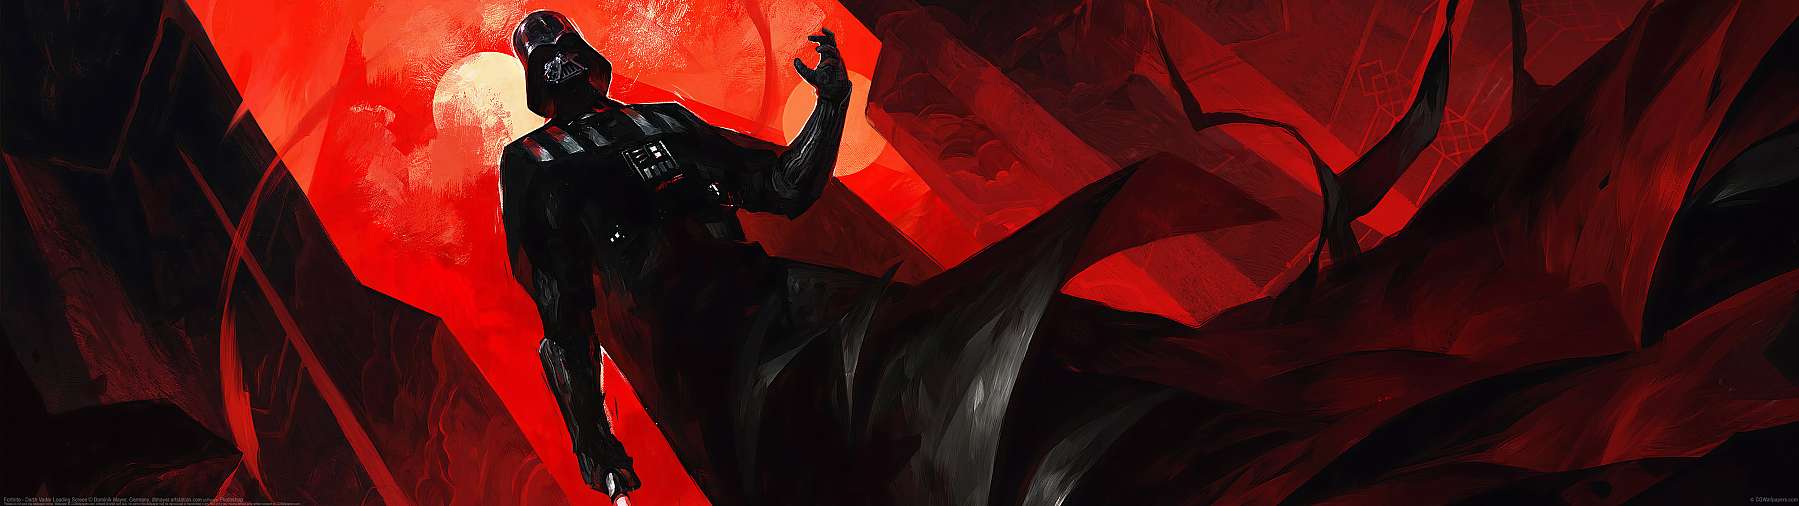 Fortnite - Darth Vader Loading Screen ultralarge fond d'écran